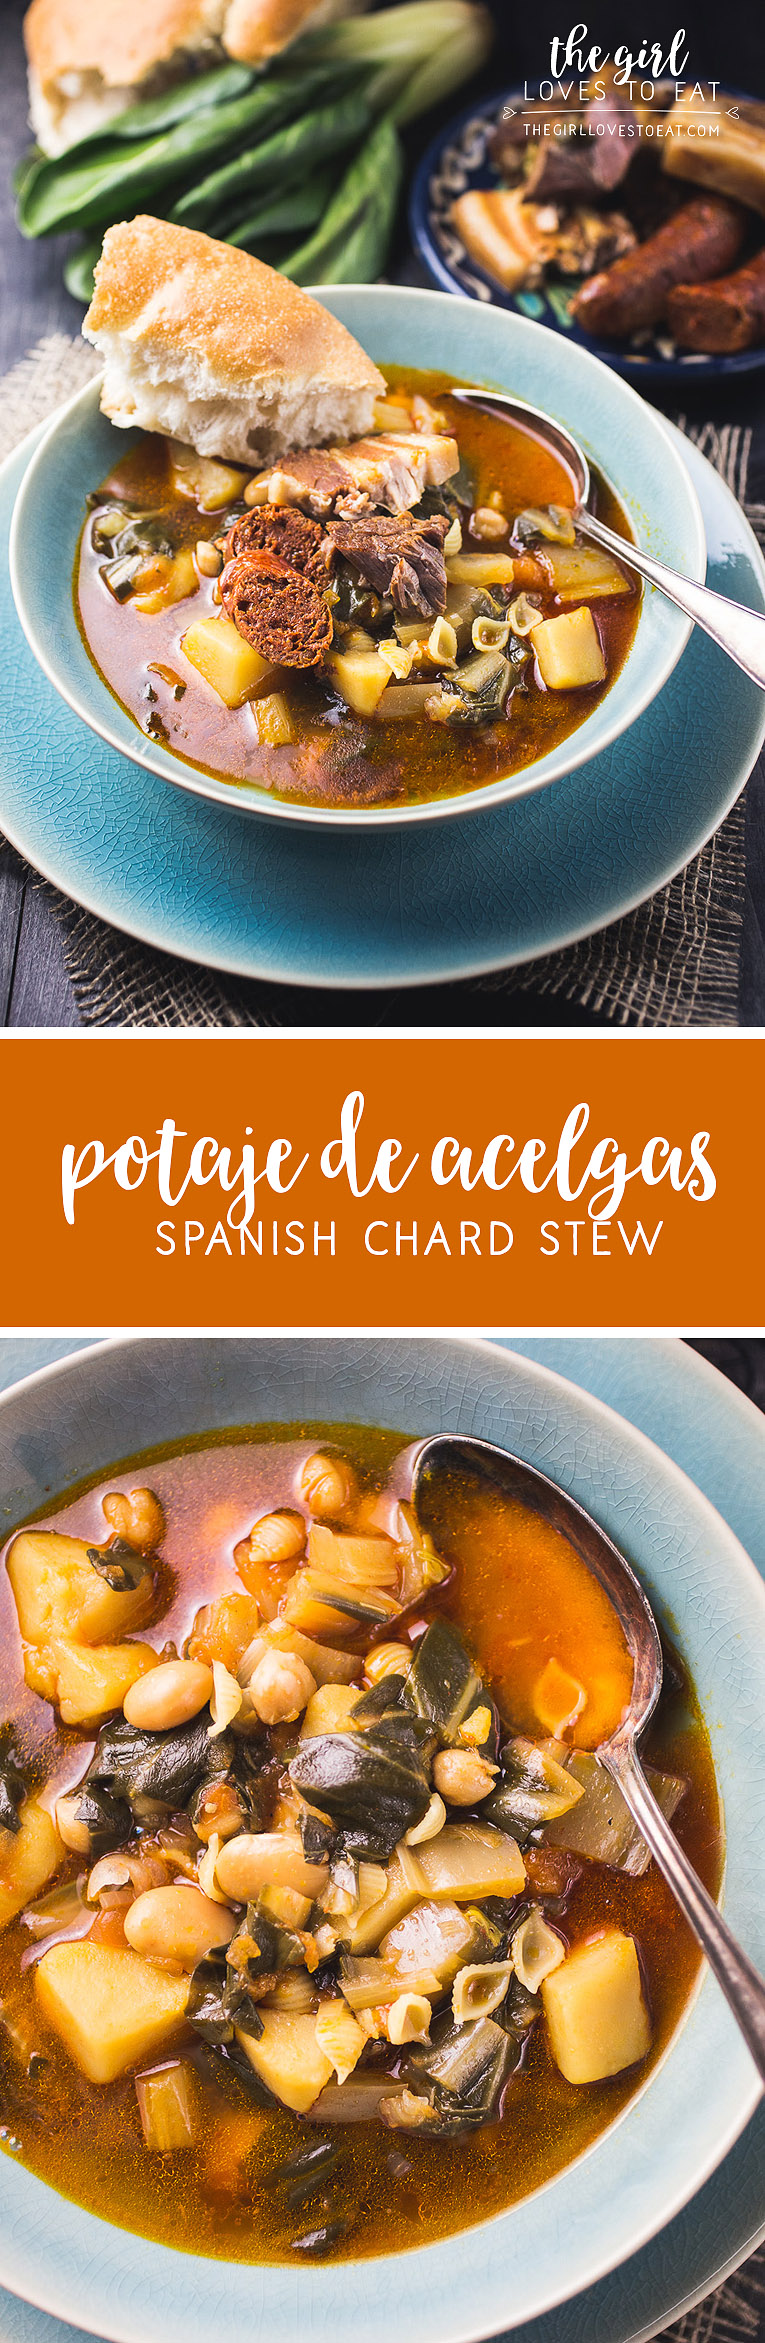 Potaje de acelgas - Spanish Chard Stew { thegirllovestoeat.com }